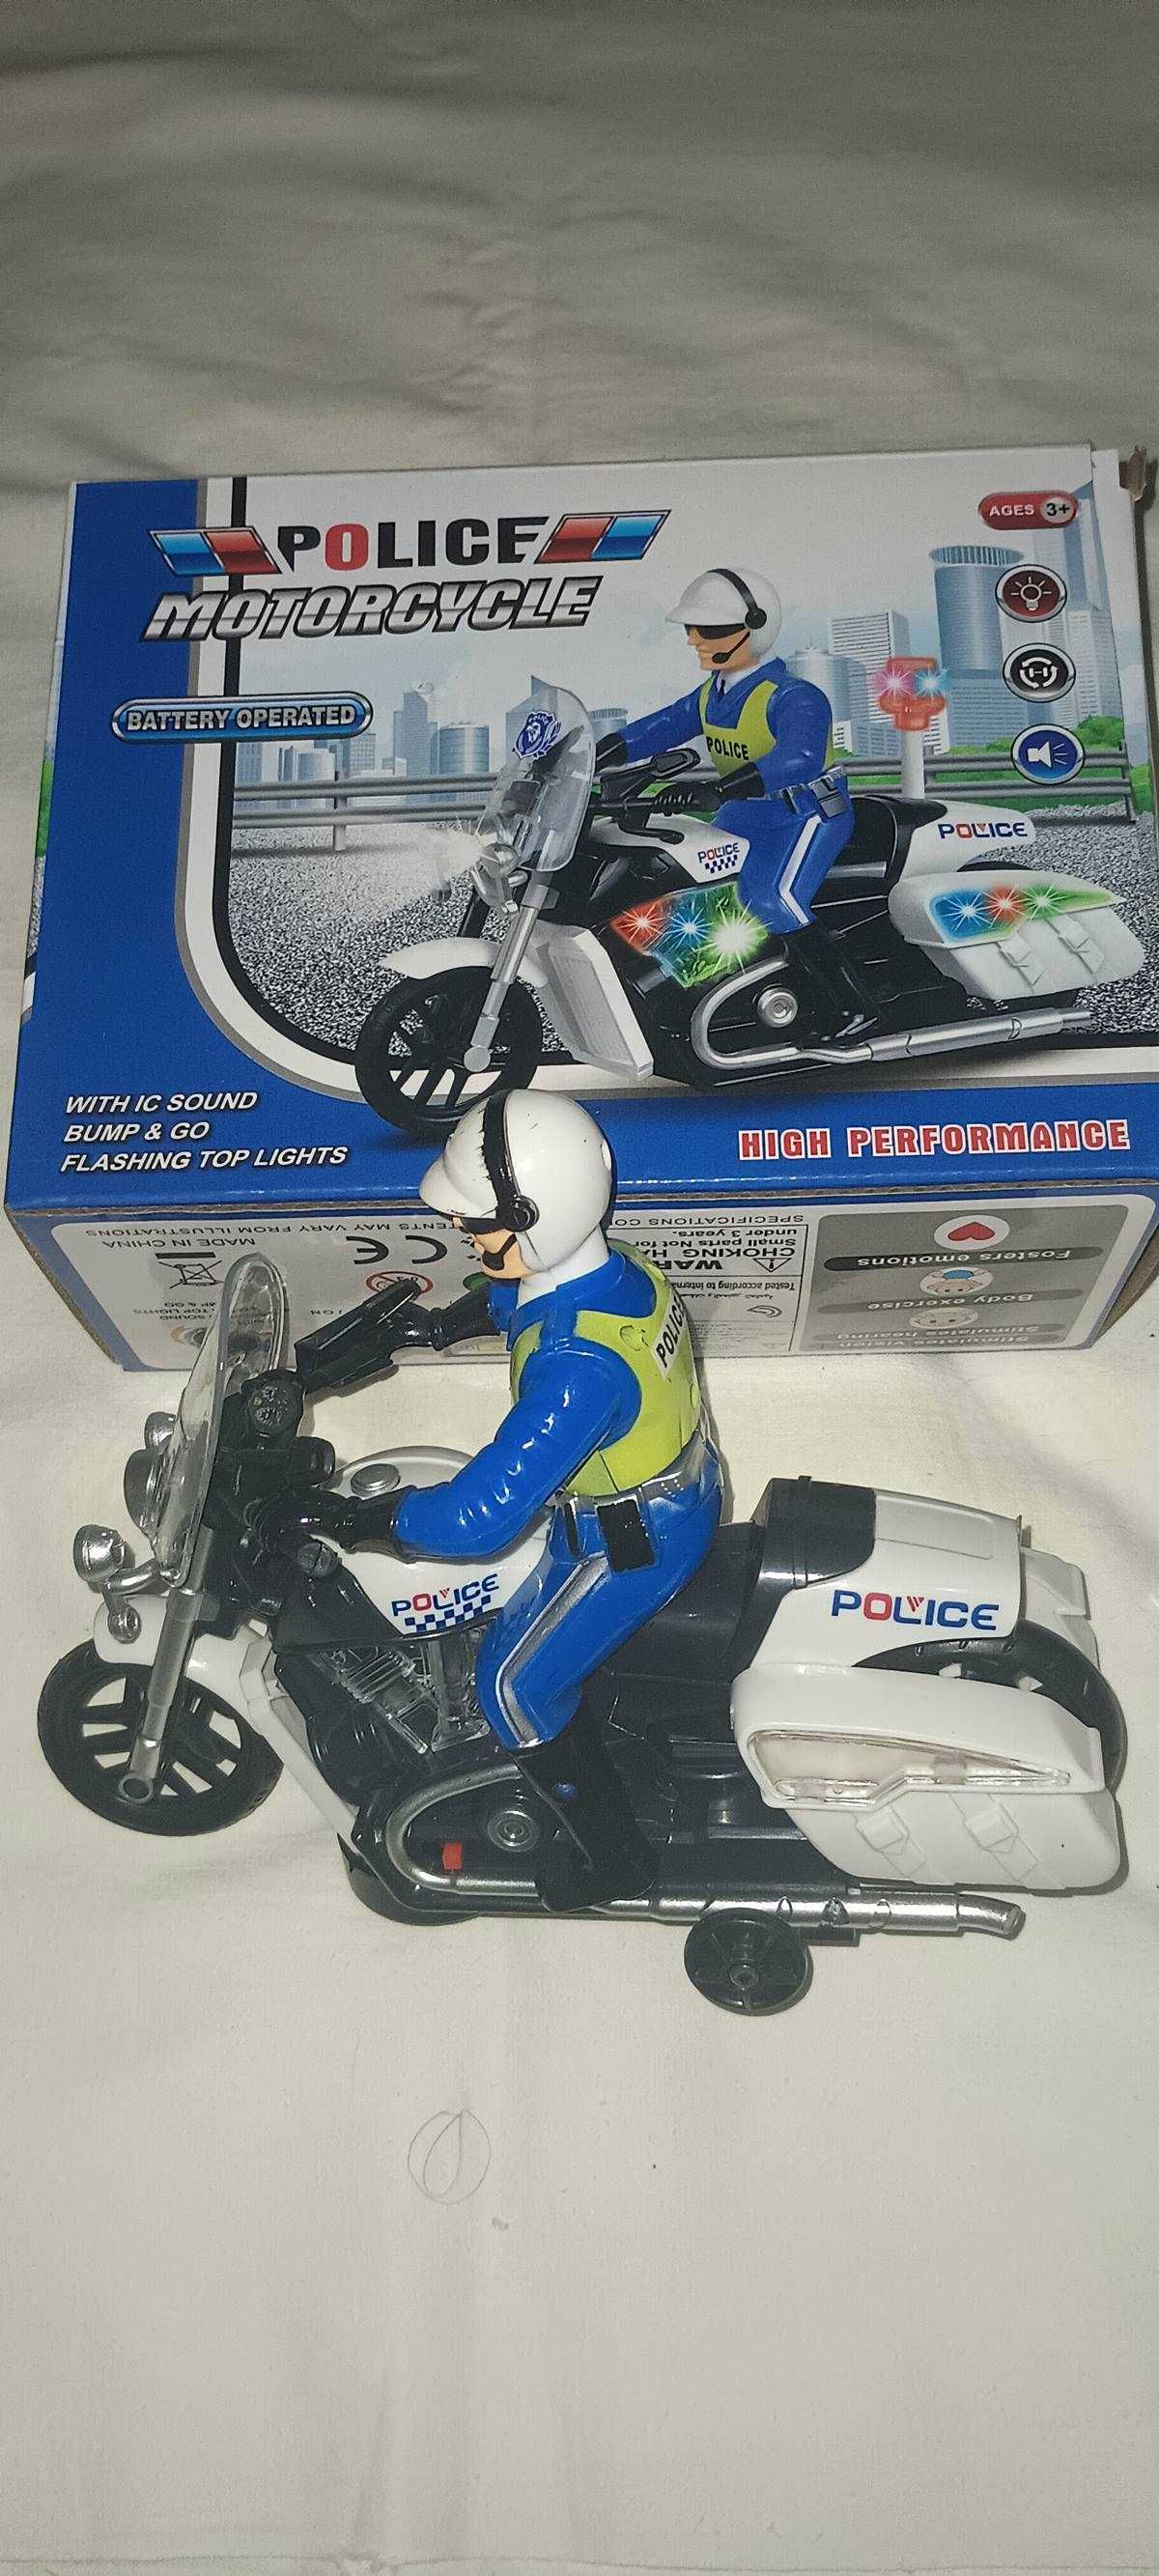 Policjant na motocyklu. Zabawka interaktywna.